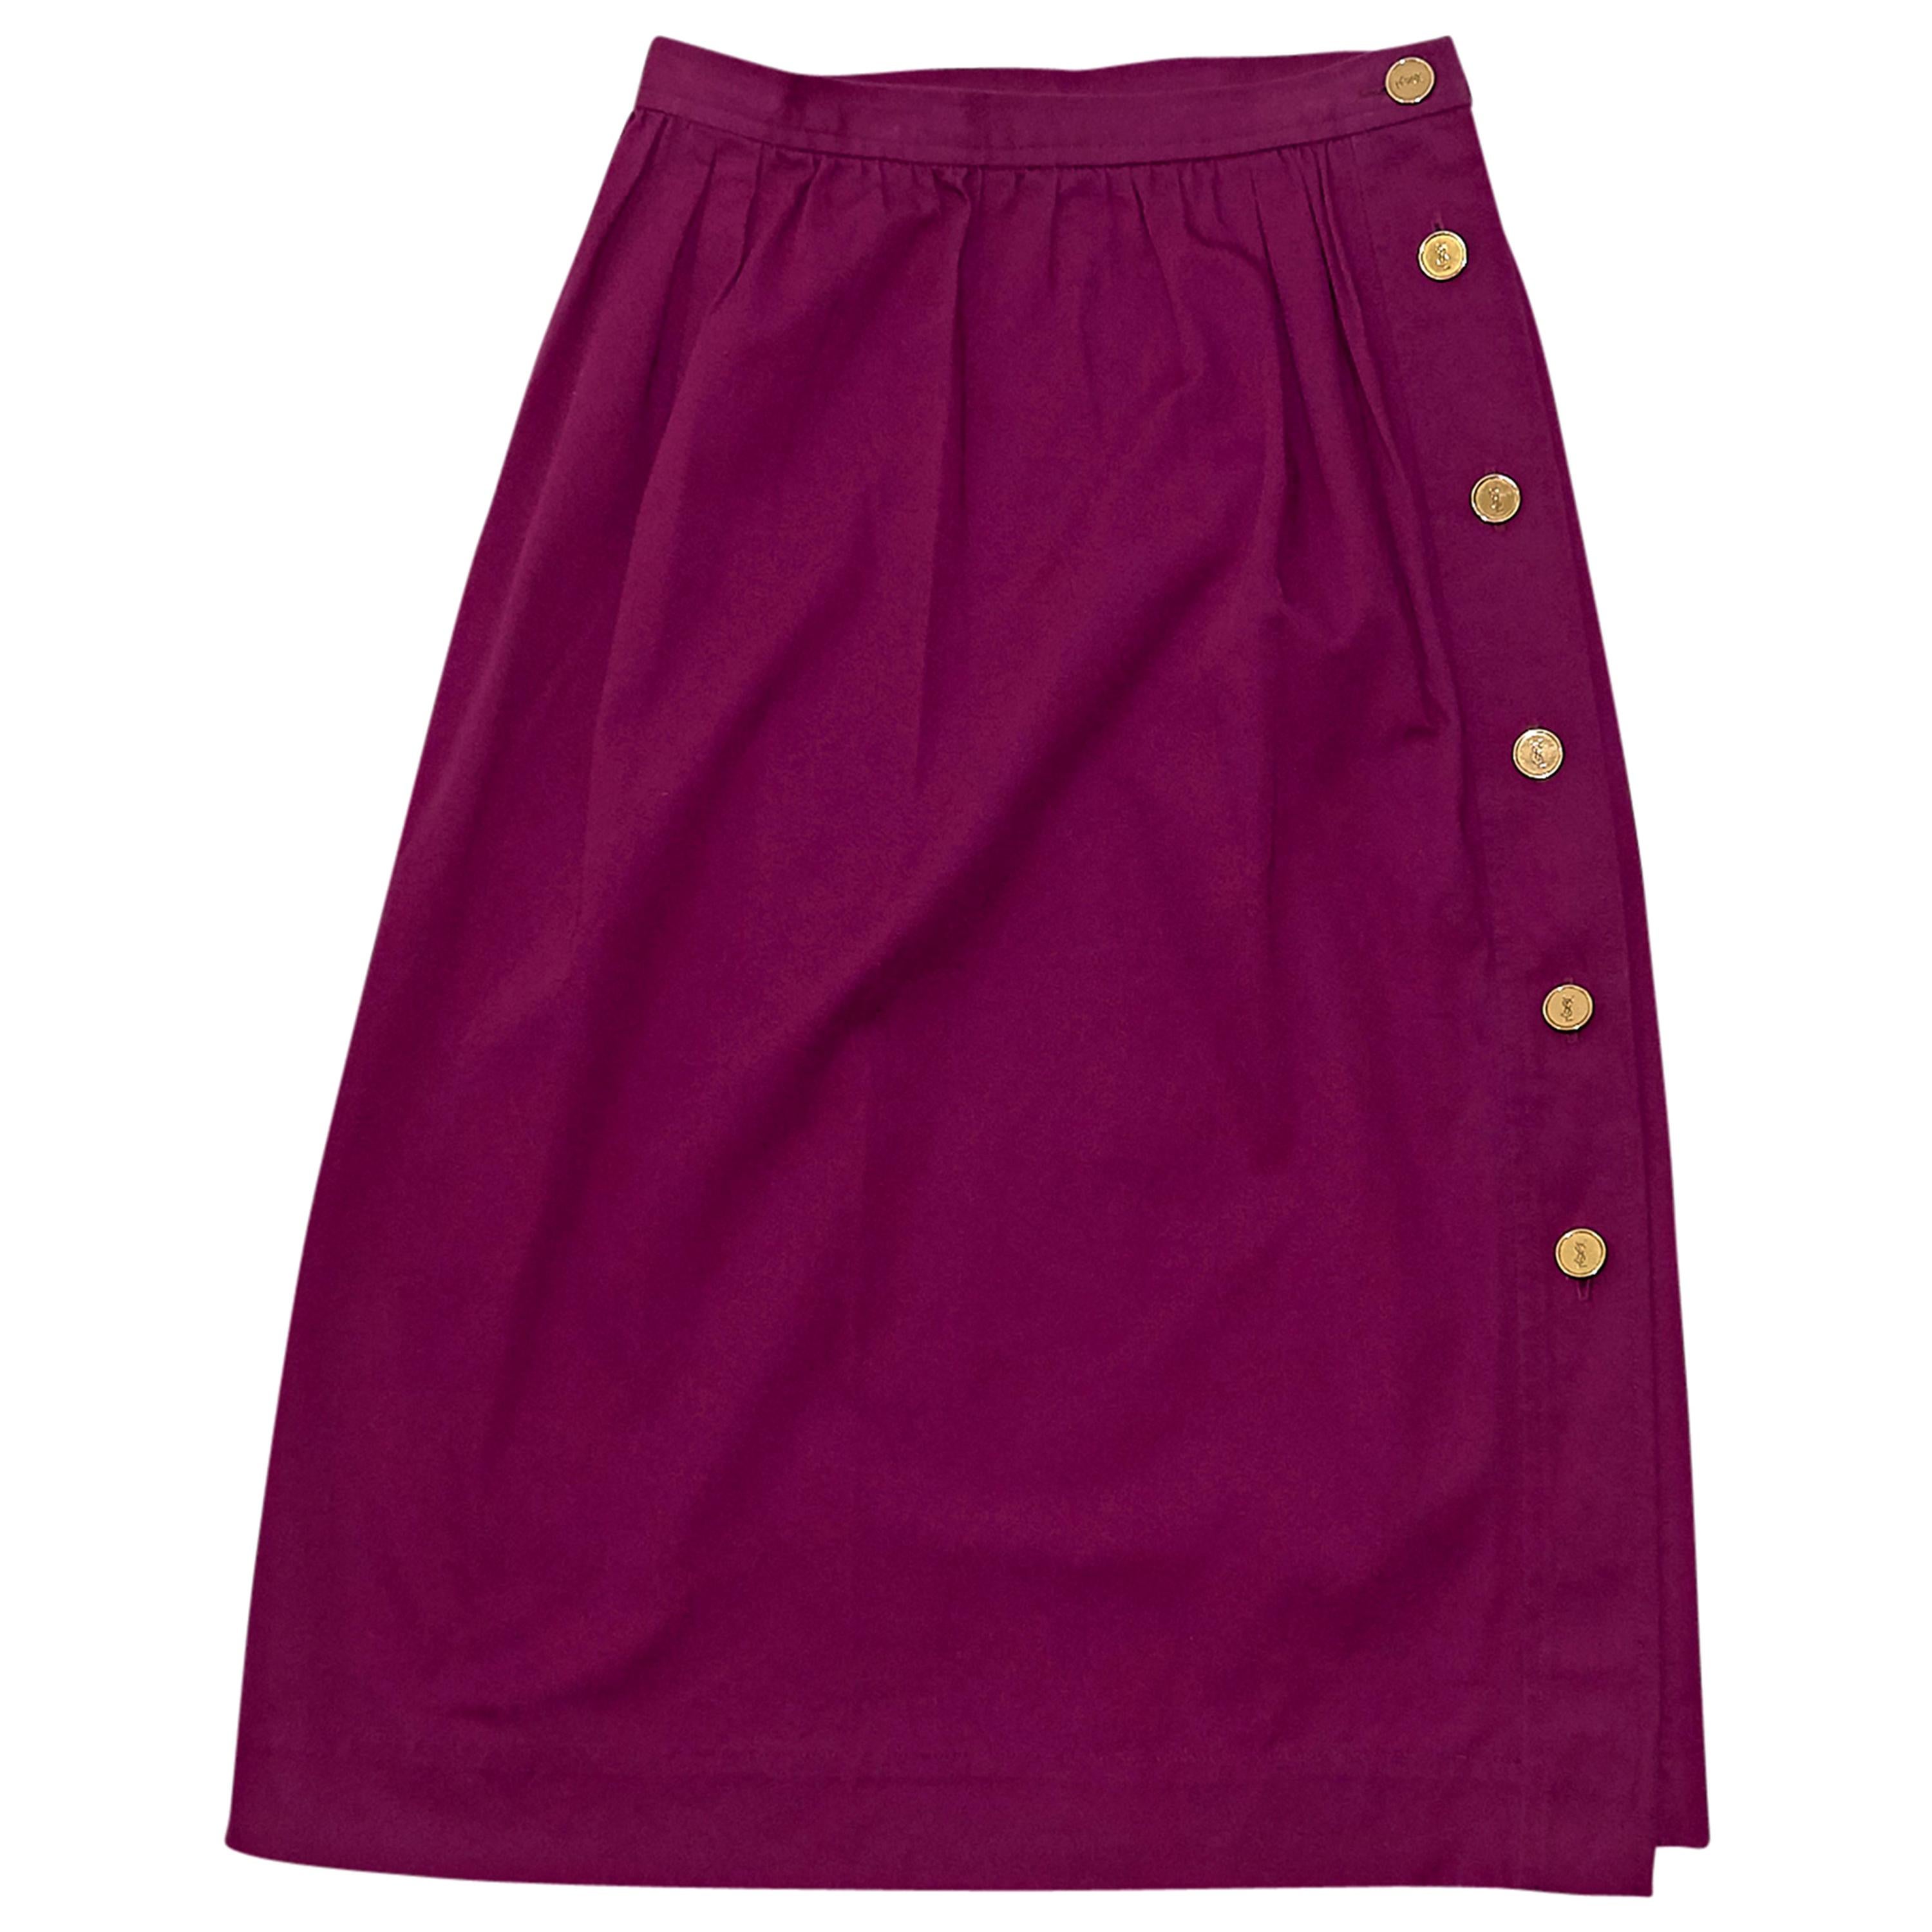 Yves Saint Laurent Purple High-Waist Skirt